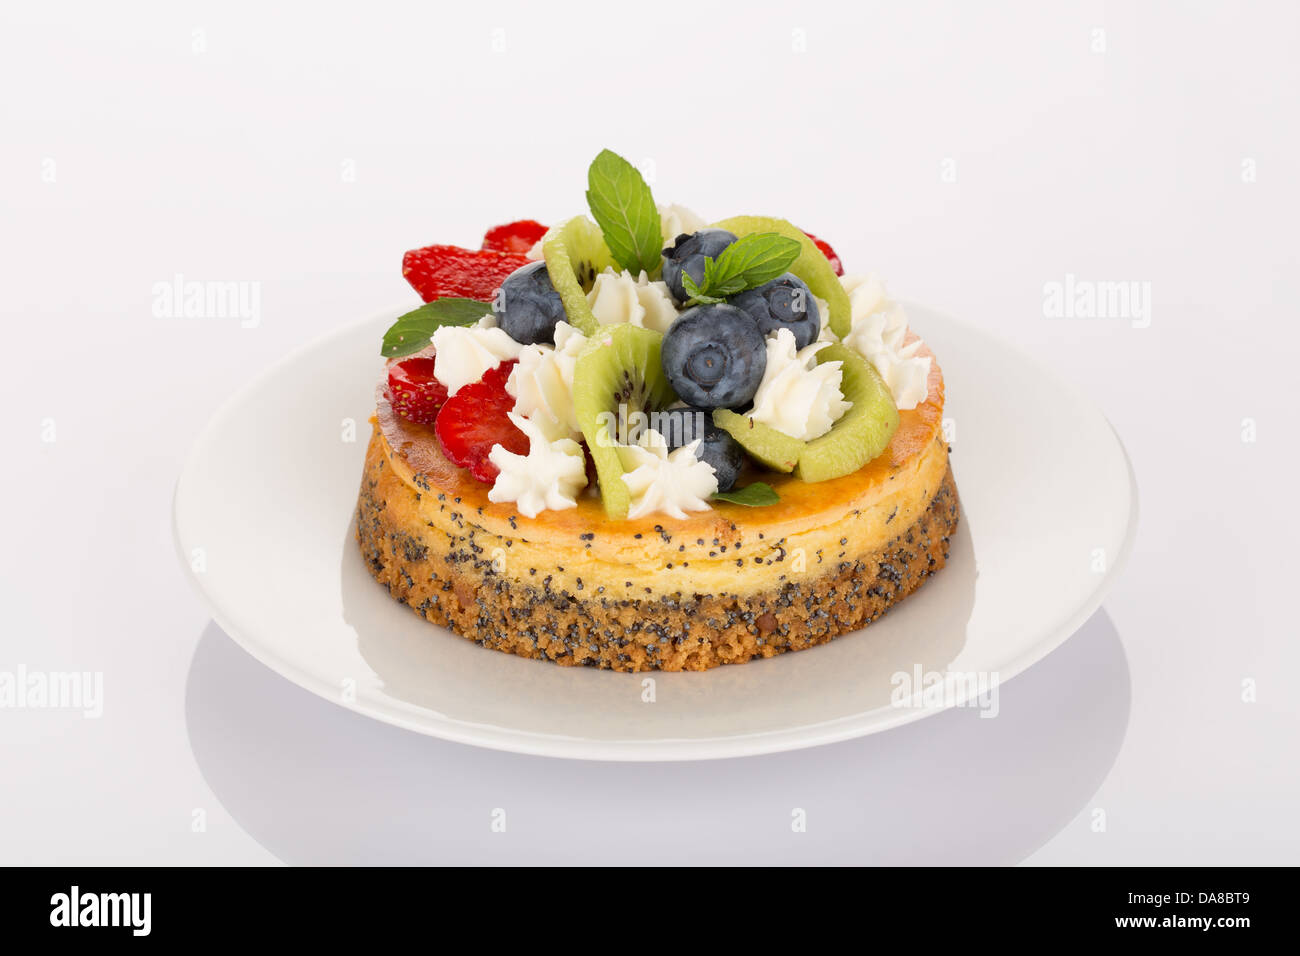 Cheesecake with strawberry, blueberry, kiwi and cream on white plate. Stock Photo